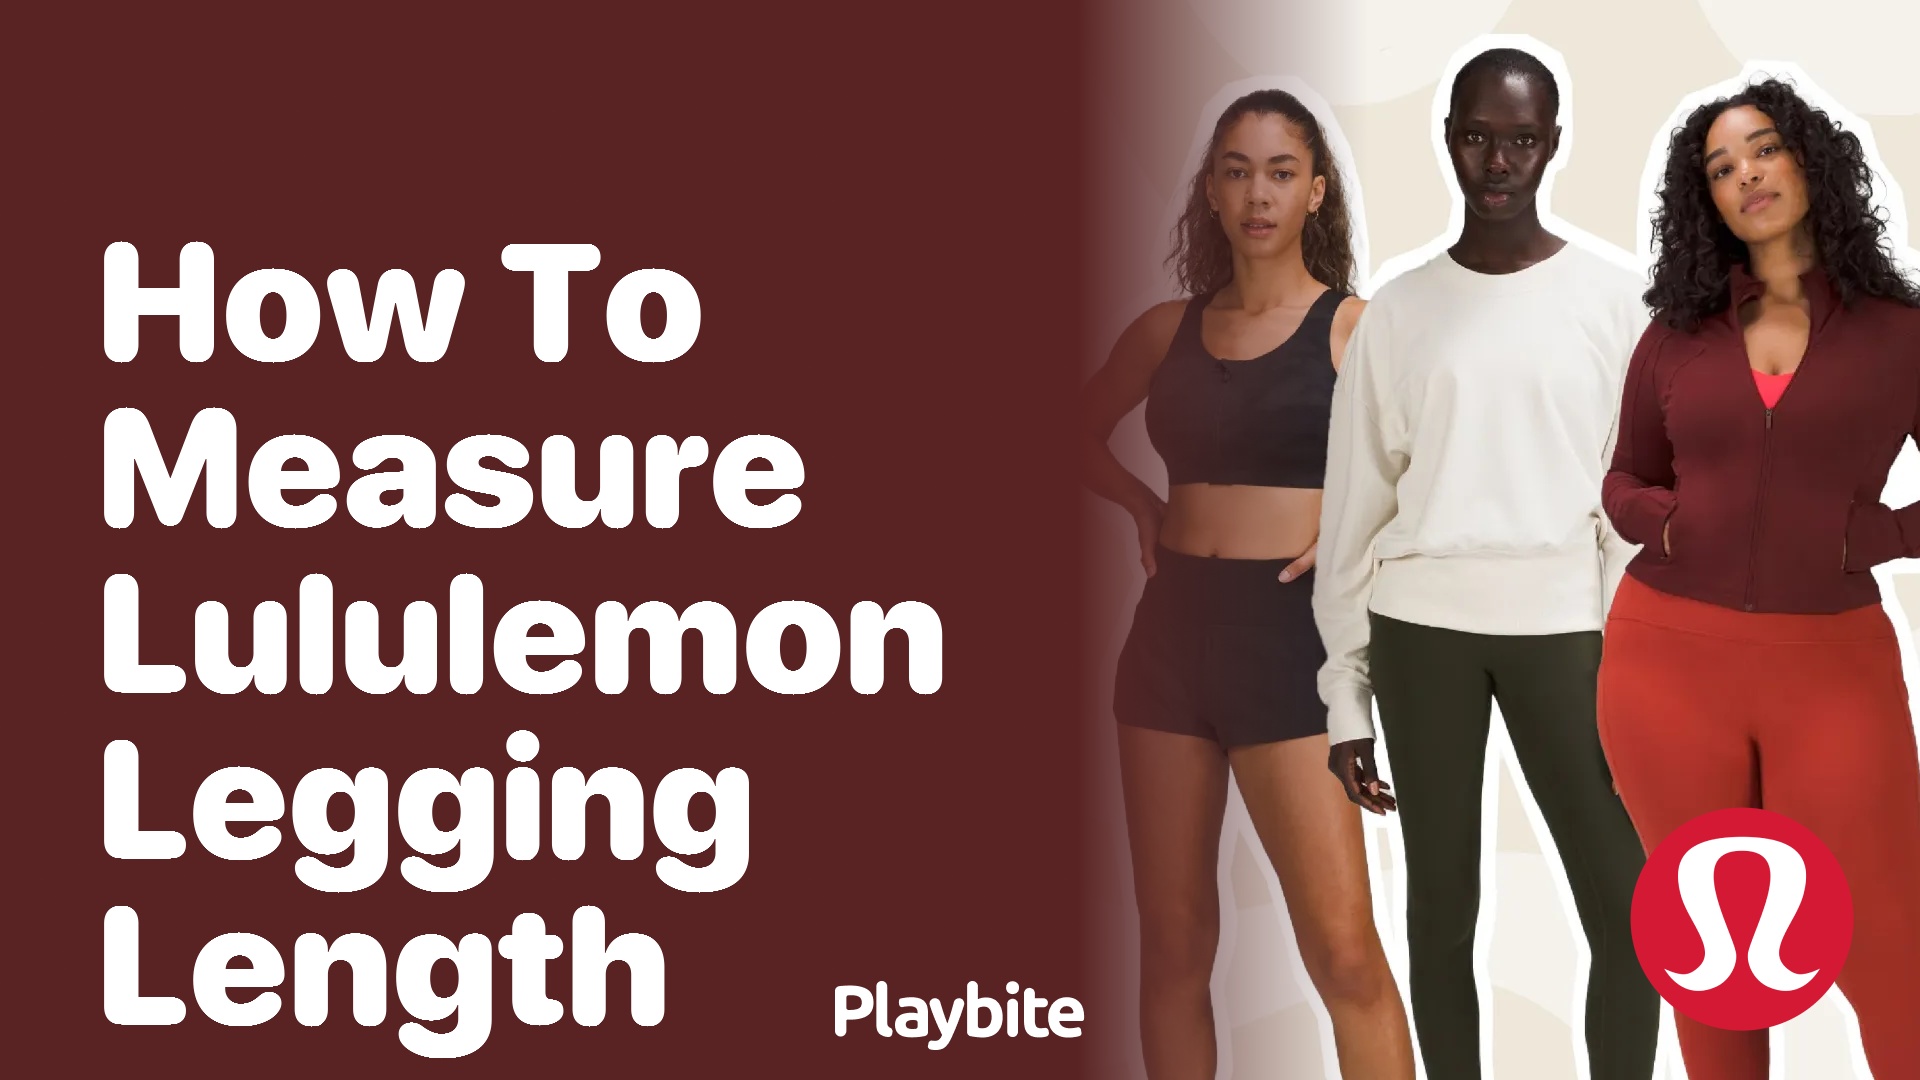 How to Measure Lululemon Legging Length Correctly - Playbite